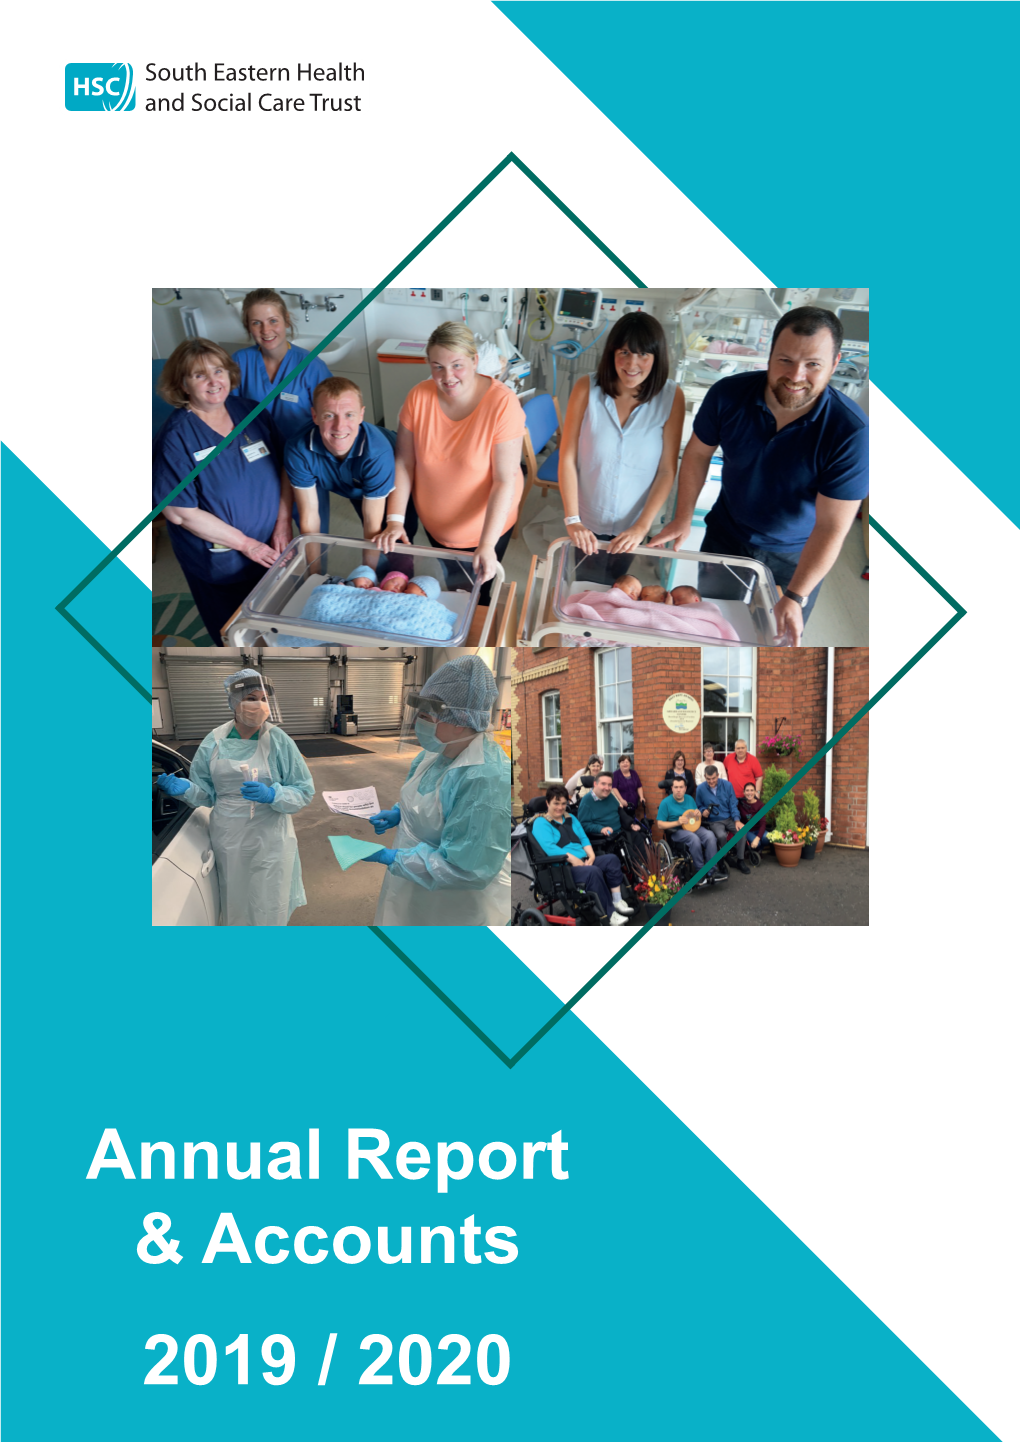 Annual Report & Accounts 2019 / 2020